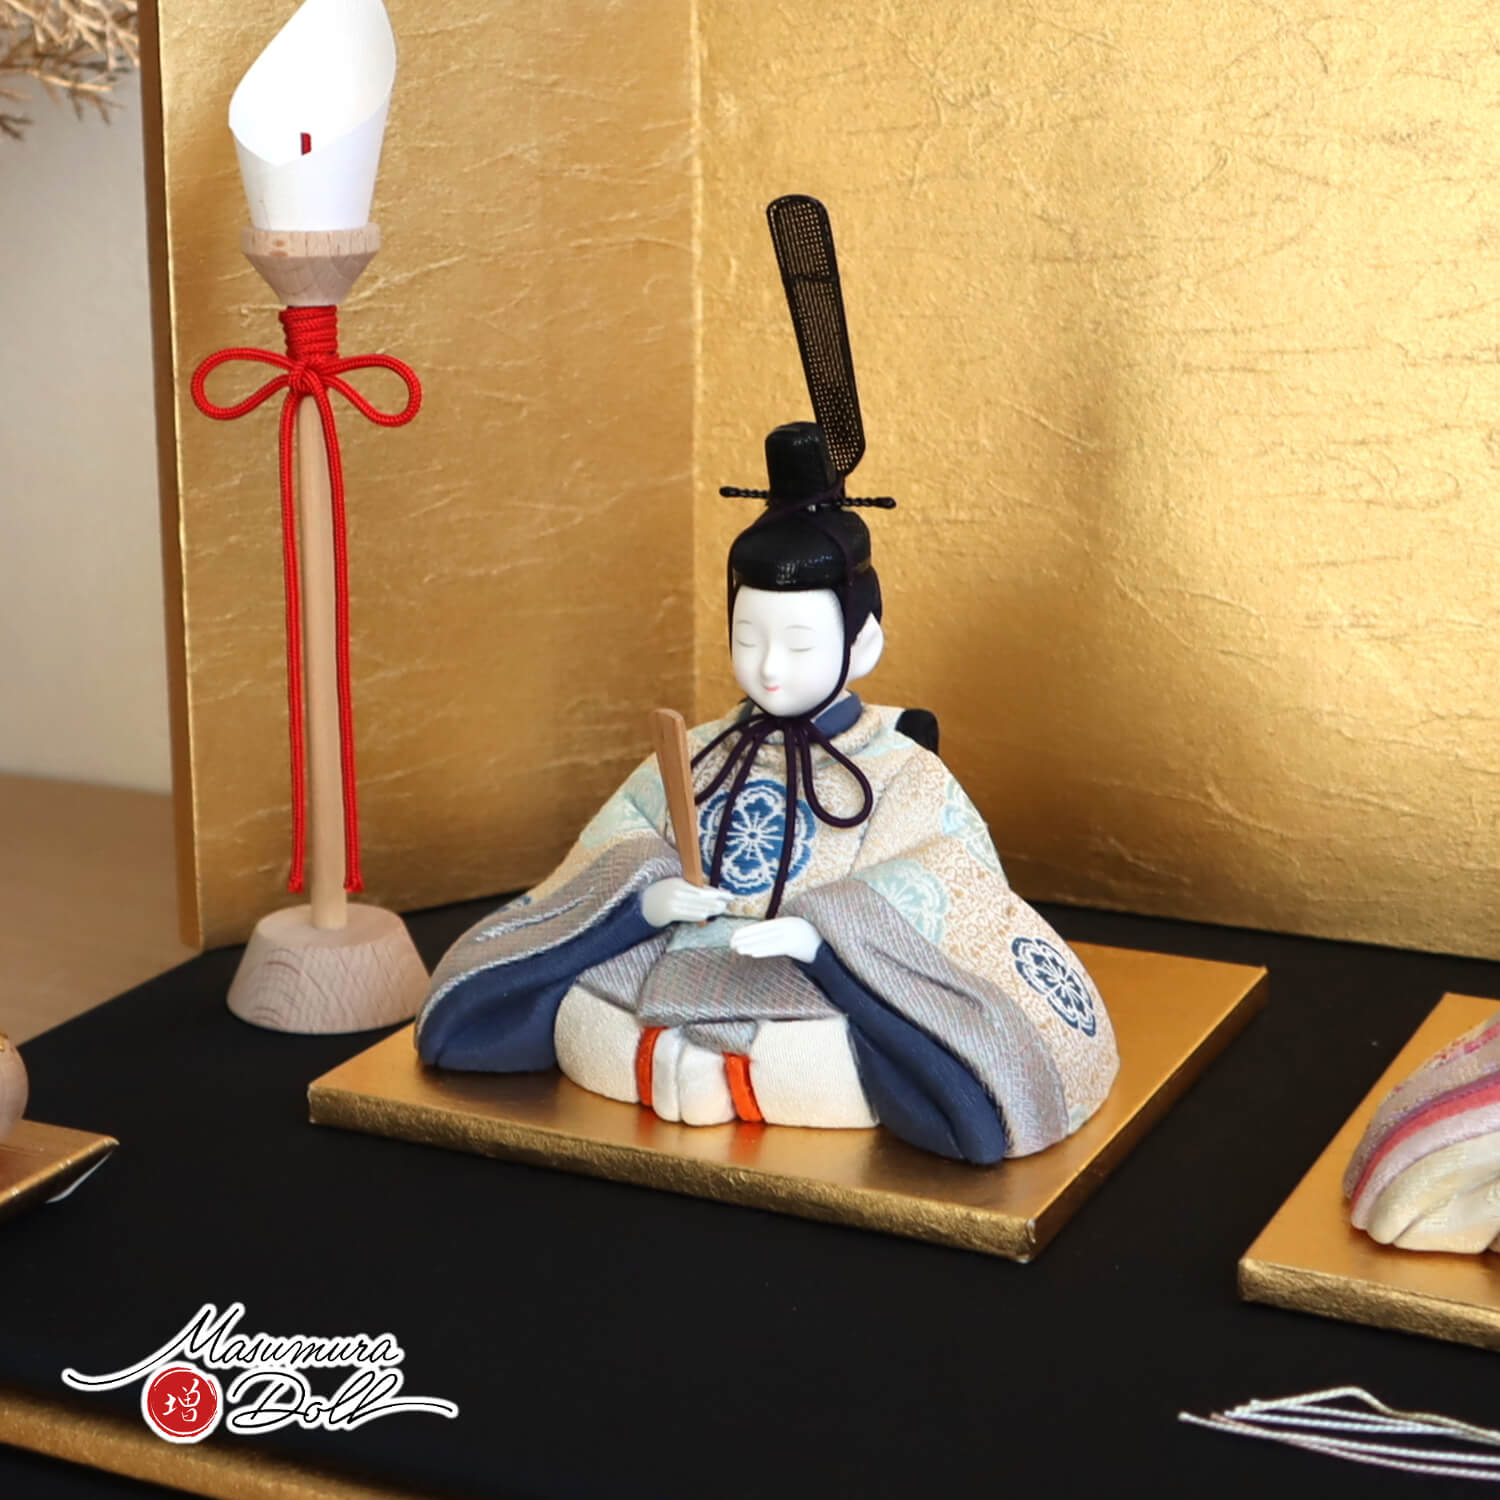 博多人形 伝統工芸士 初代 戸畑茂四郎 作『 無法松 』です。